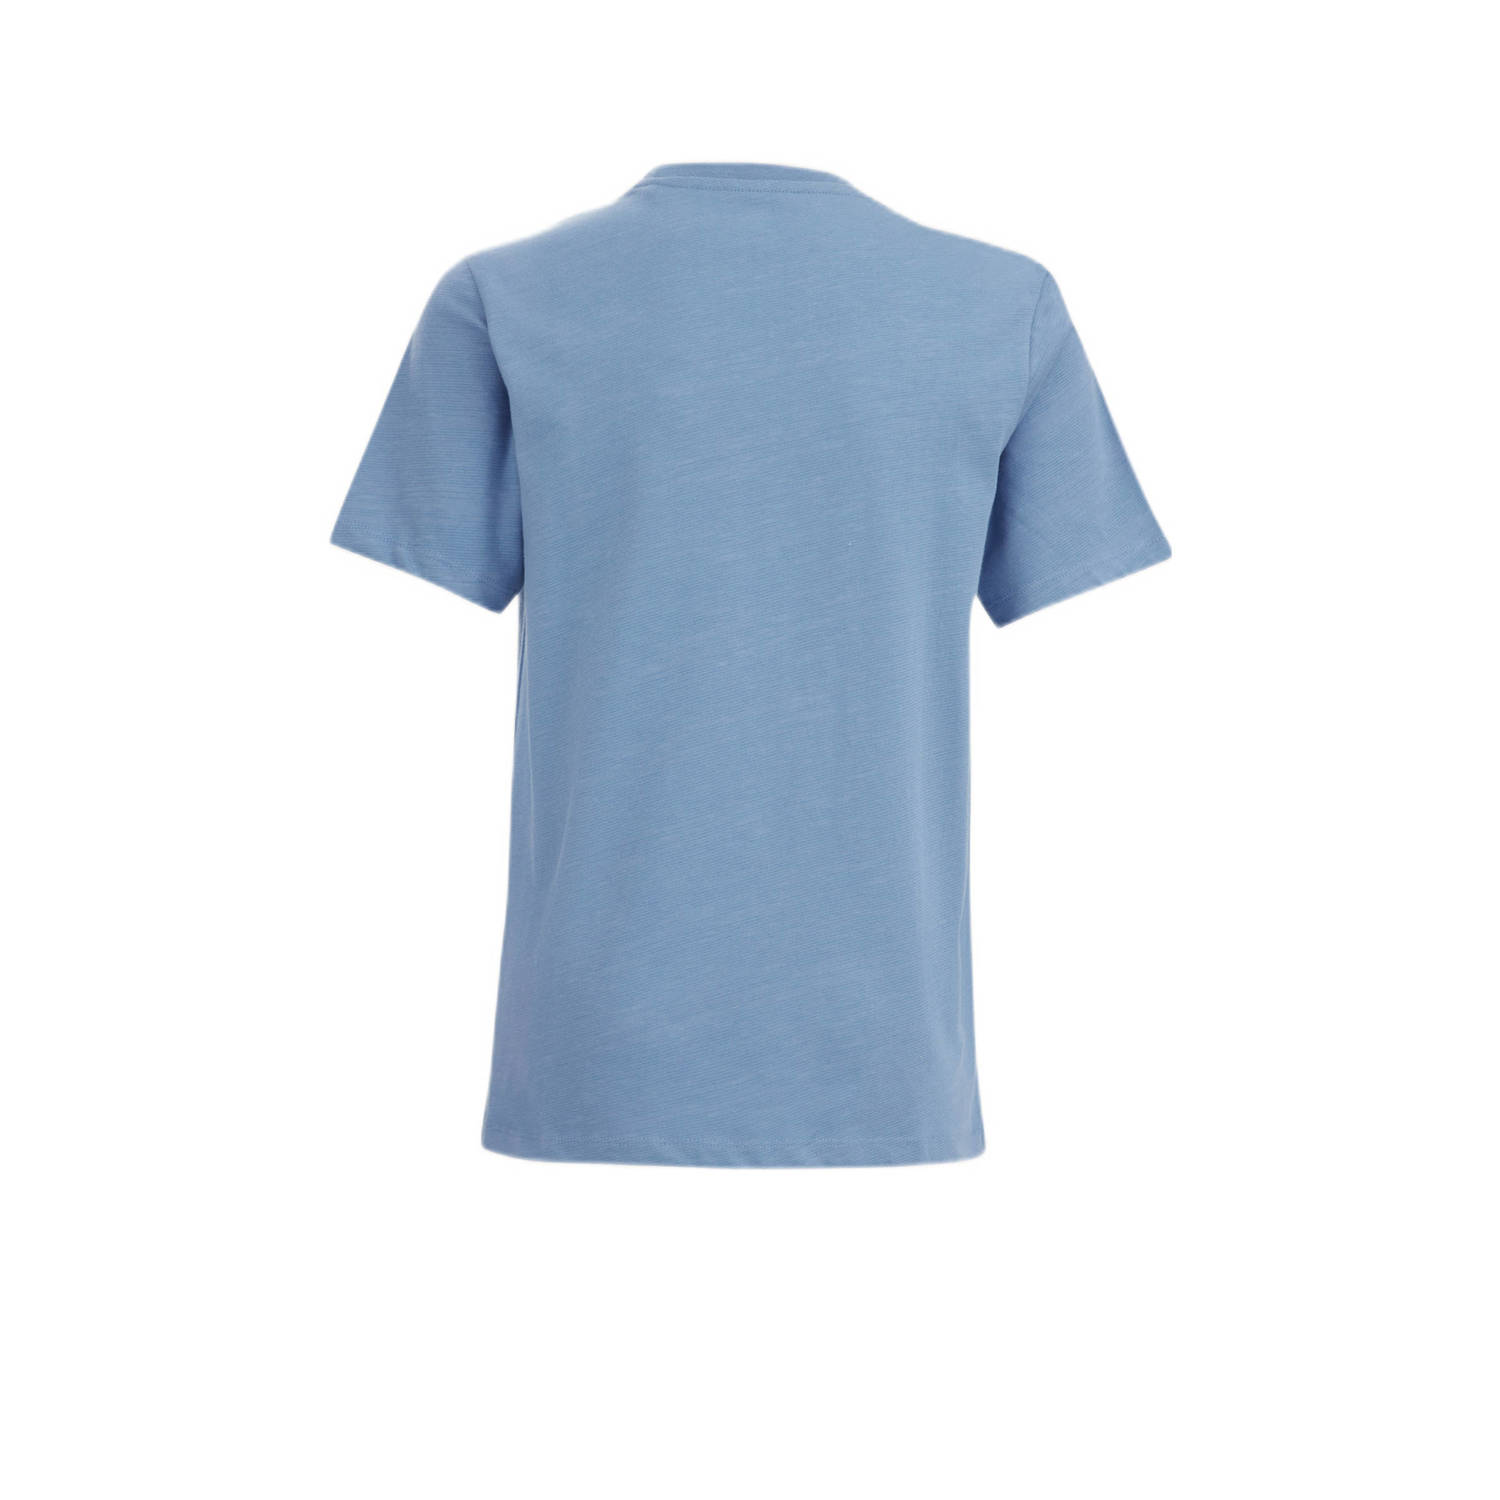 WE Fashion T-shirt grijsblauw